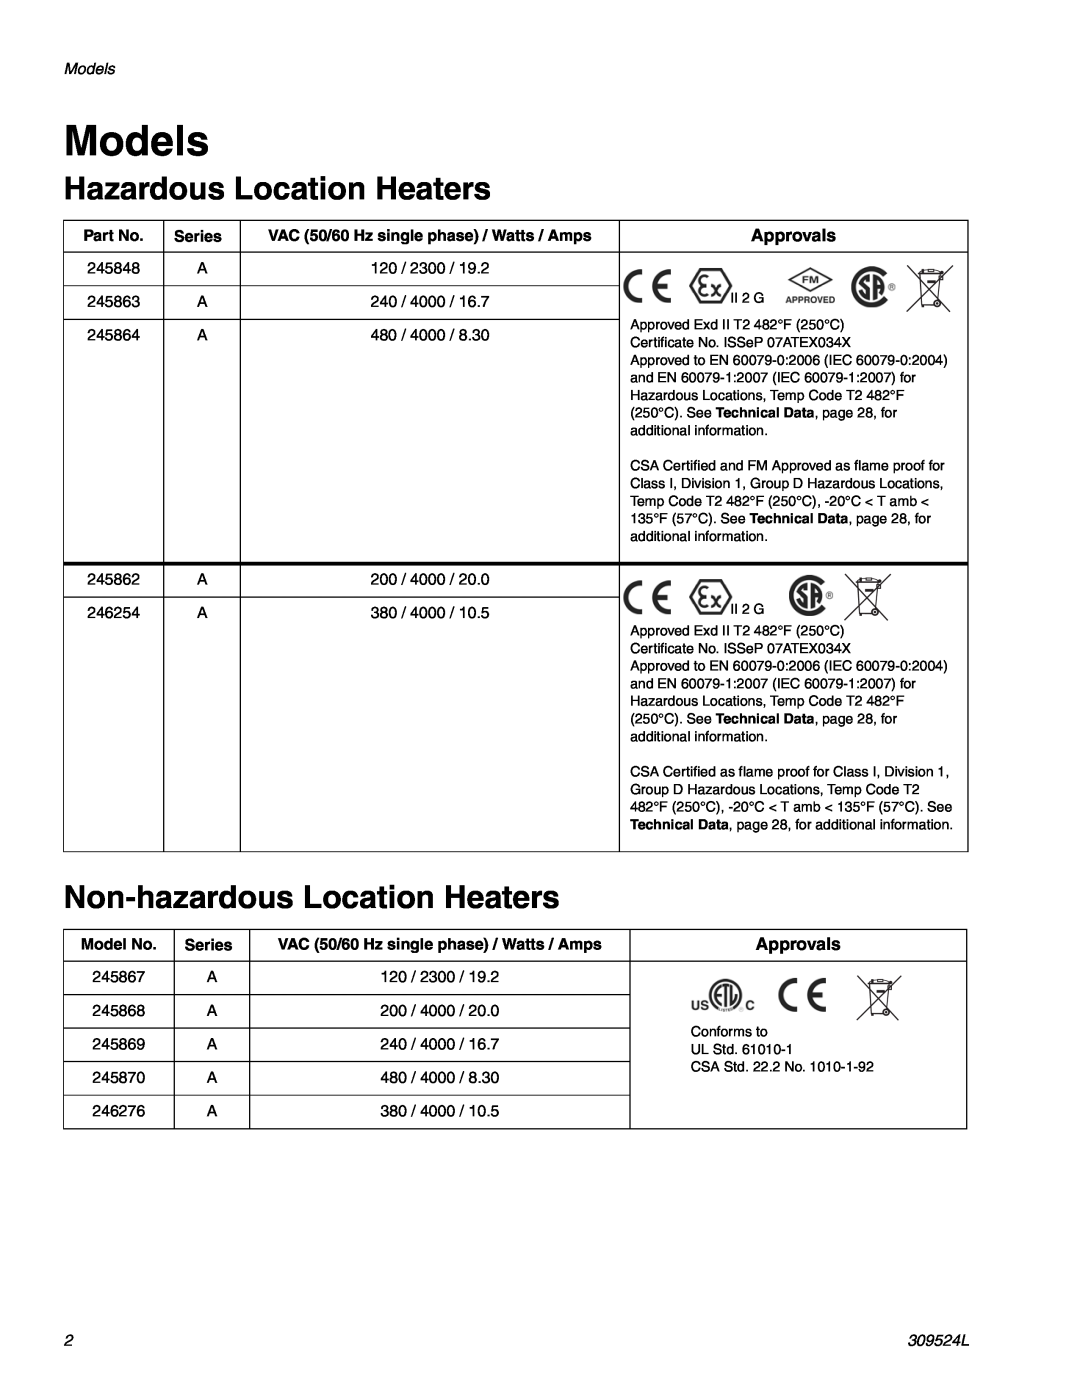 Graco 309524L Models, Hazardous Location Heaters, Non-hazardousLocation Heaters, Approvals, Series, Model No 